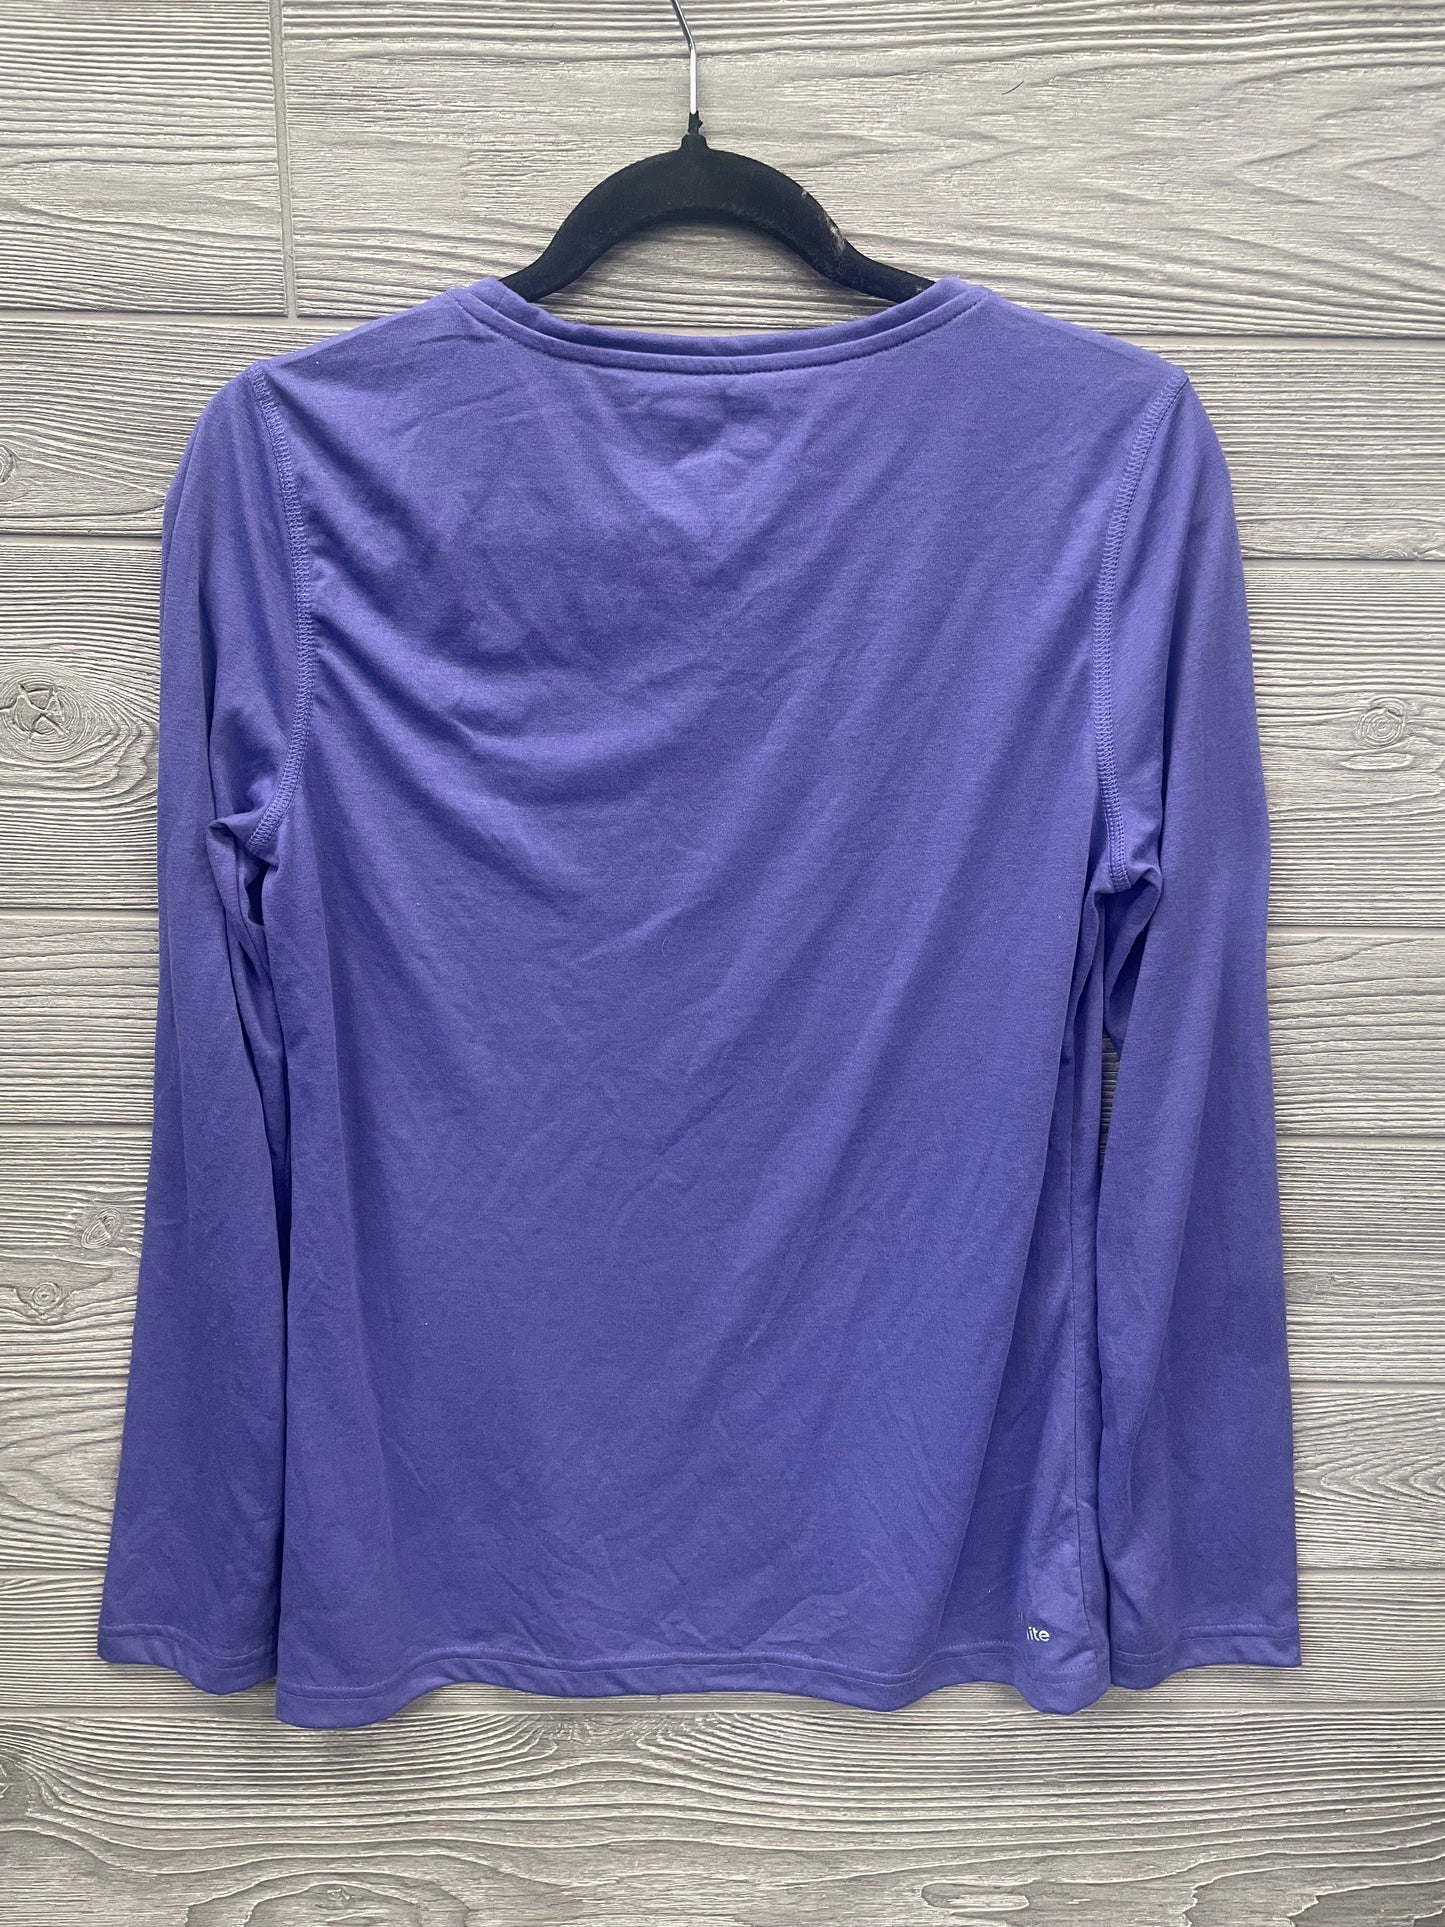 Purple Athletic Top Long Sleeve Collar Adidas, Size M